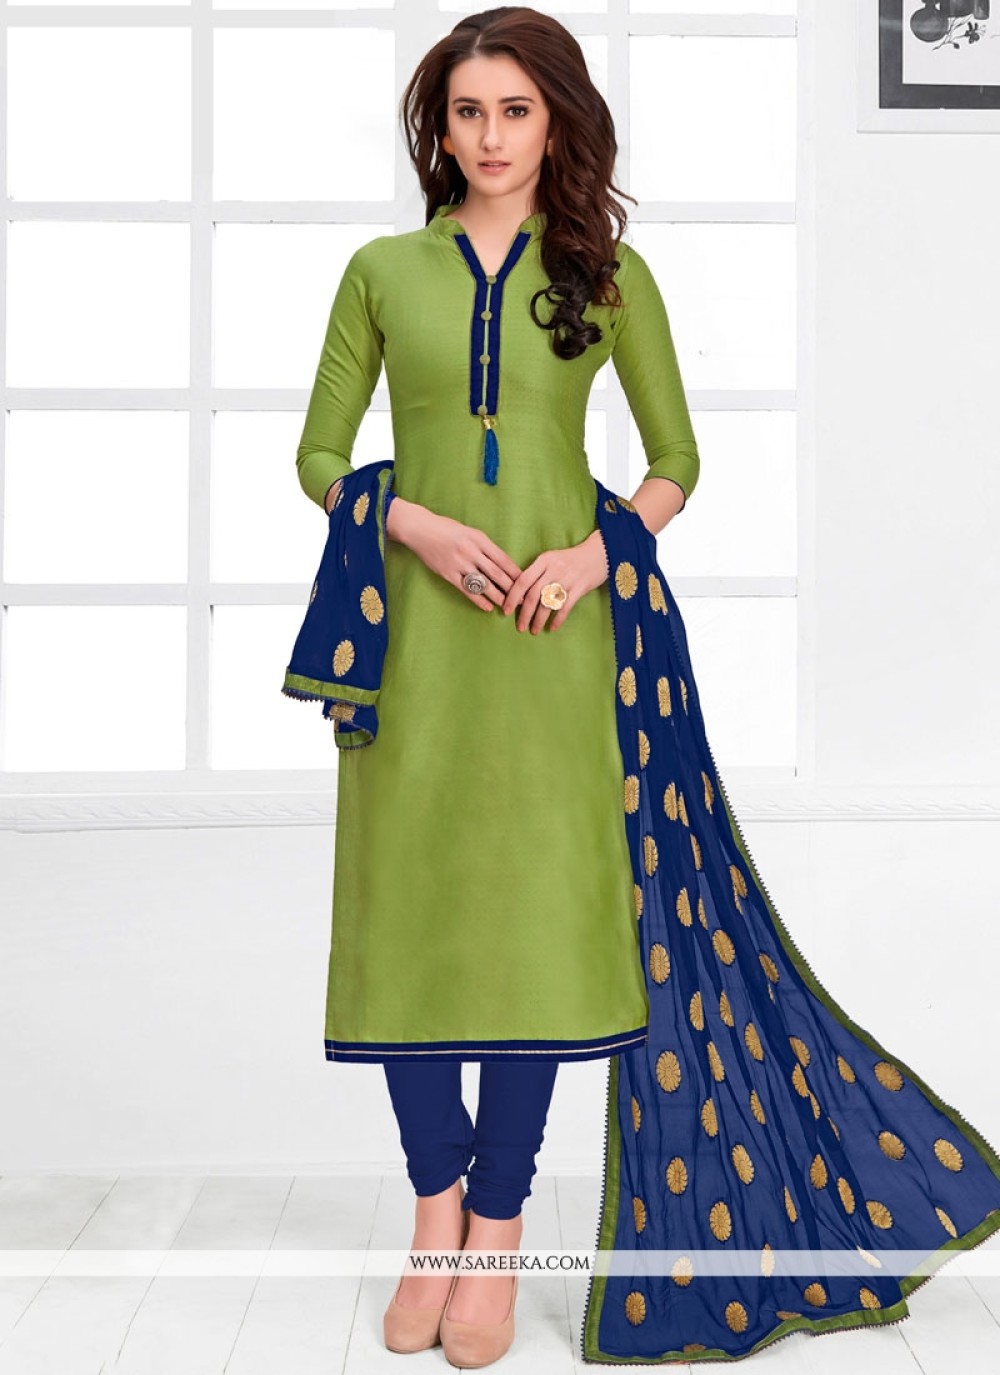 Casual Wear 3/4th Sleeves Cotton Churidar Salwar Kameez at Rs 1400